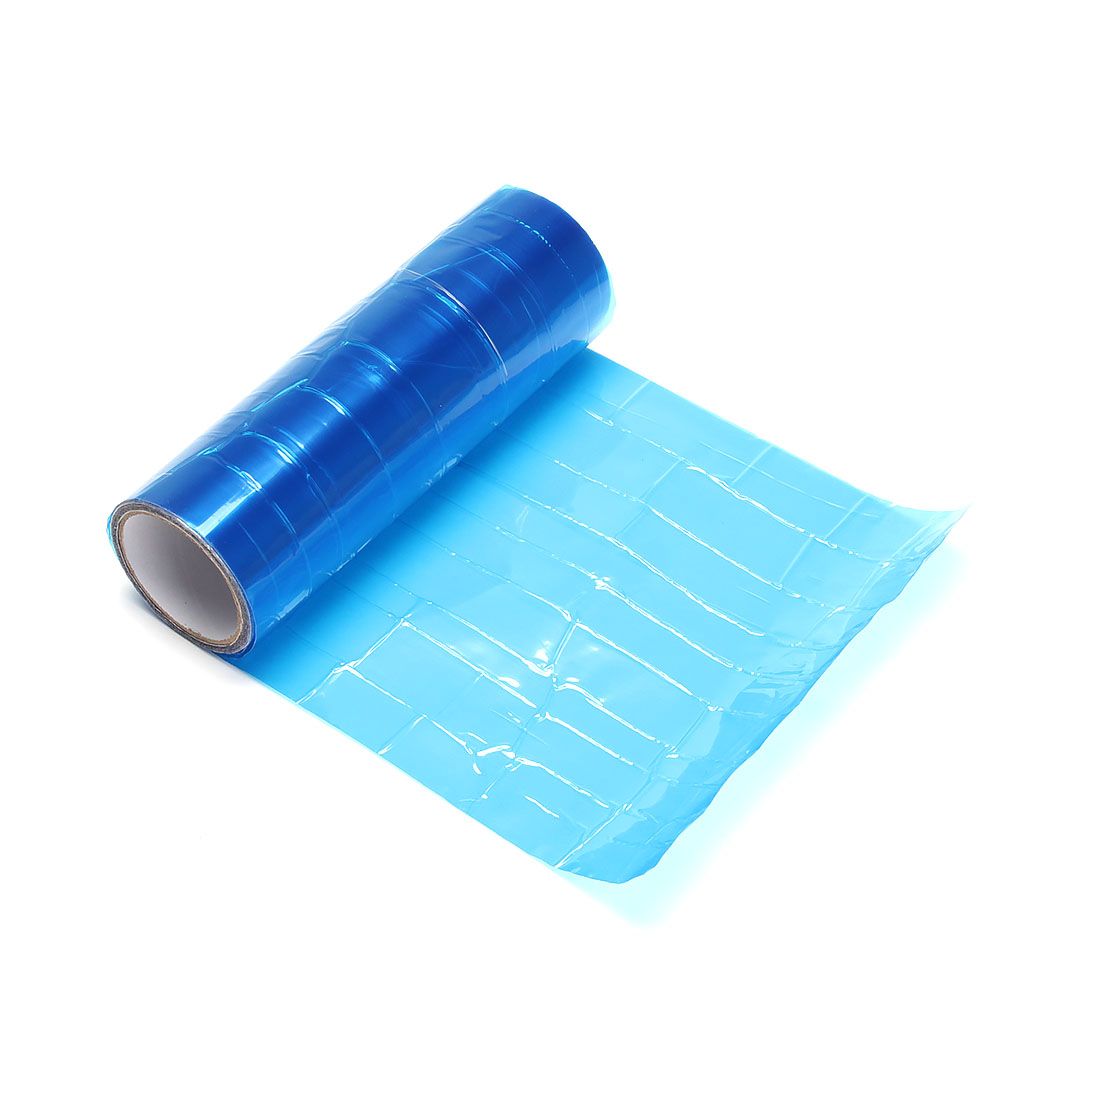 Пленка для фар защитная, тонировочная, автомобильная, глянцевая - 30см х 1п.м., цвет: синий